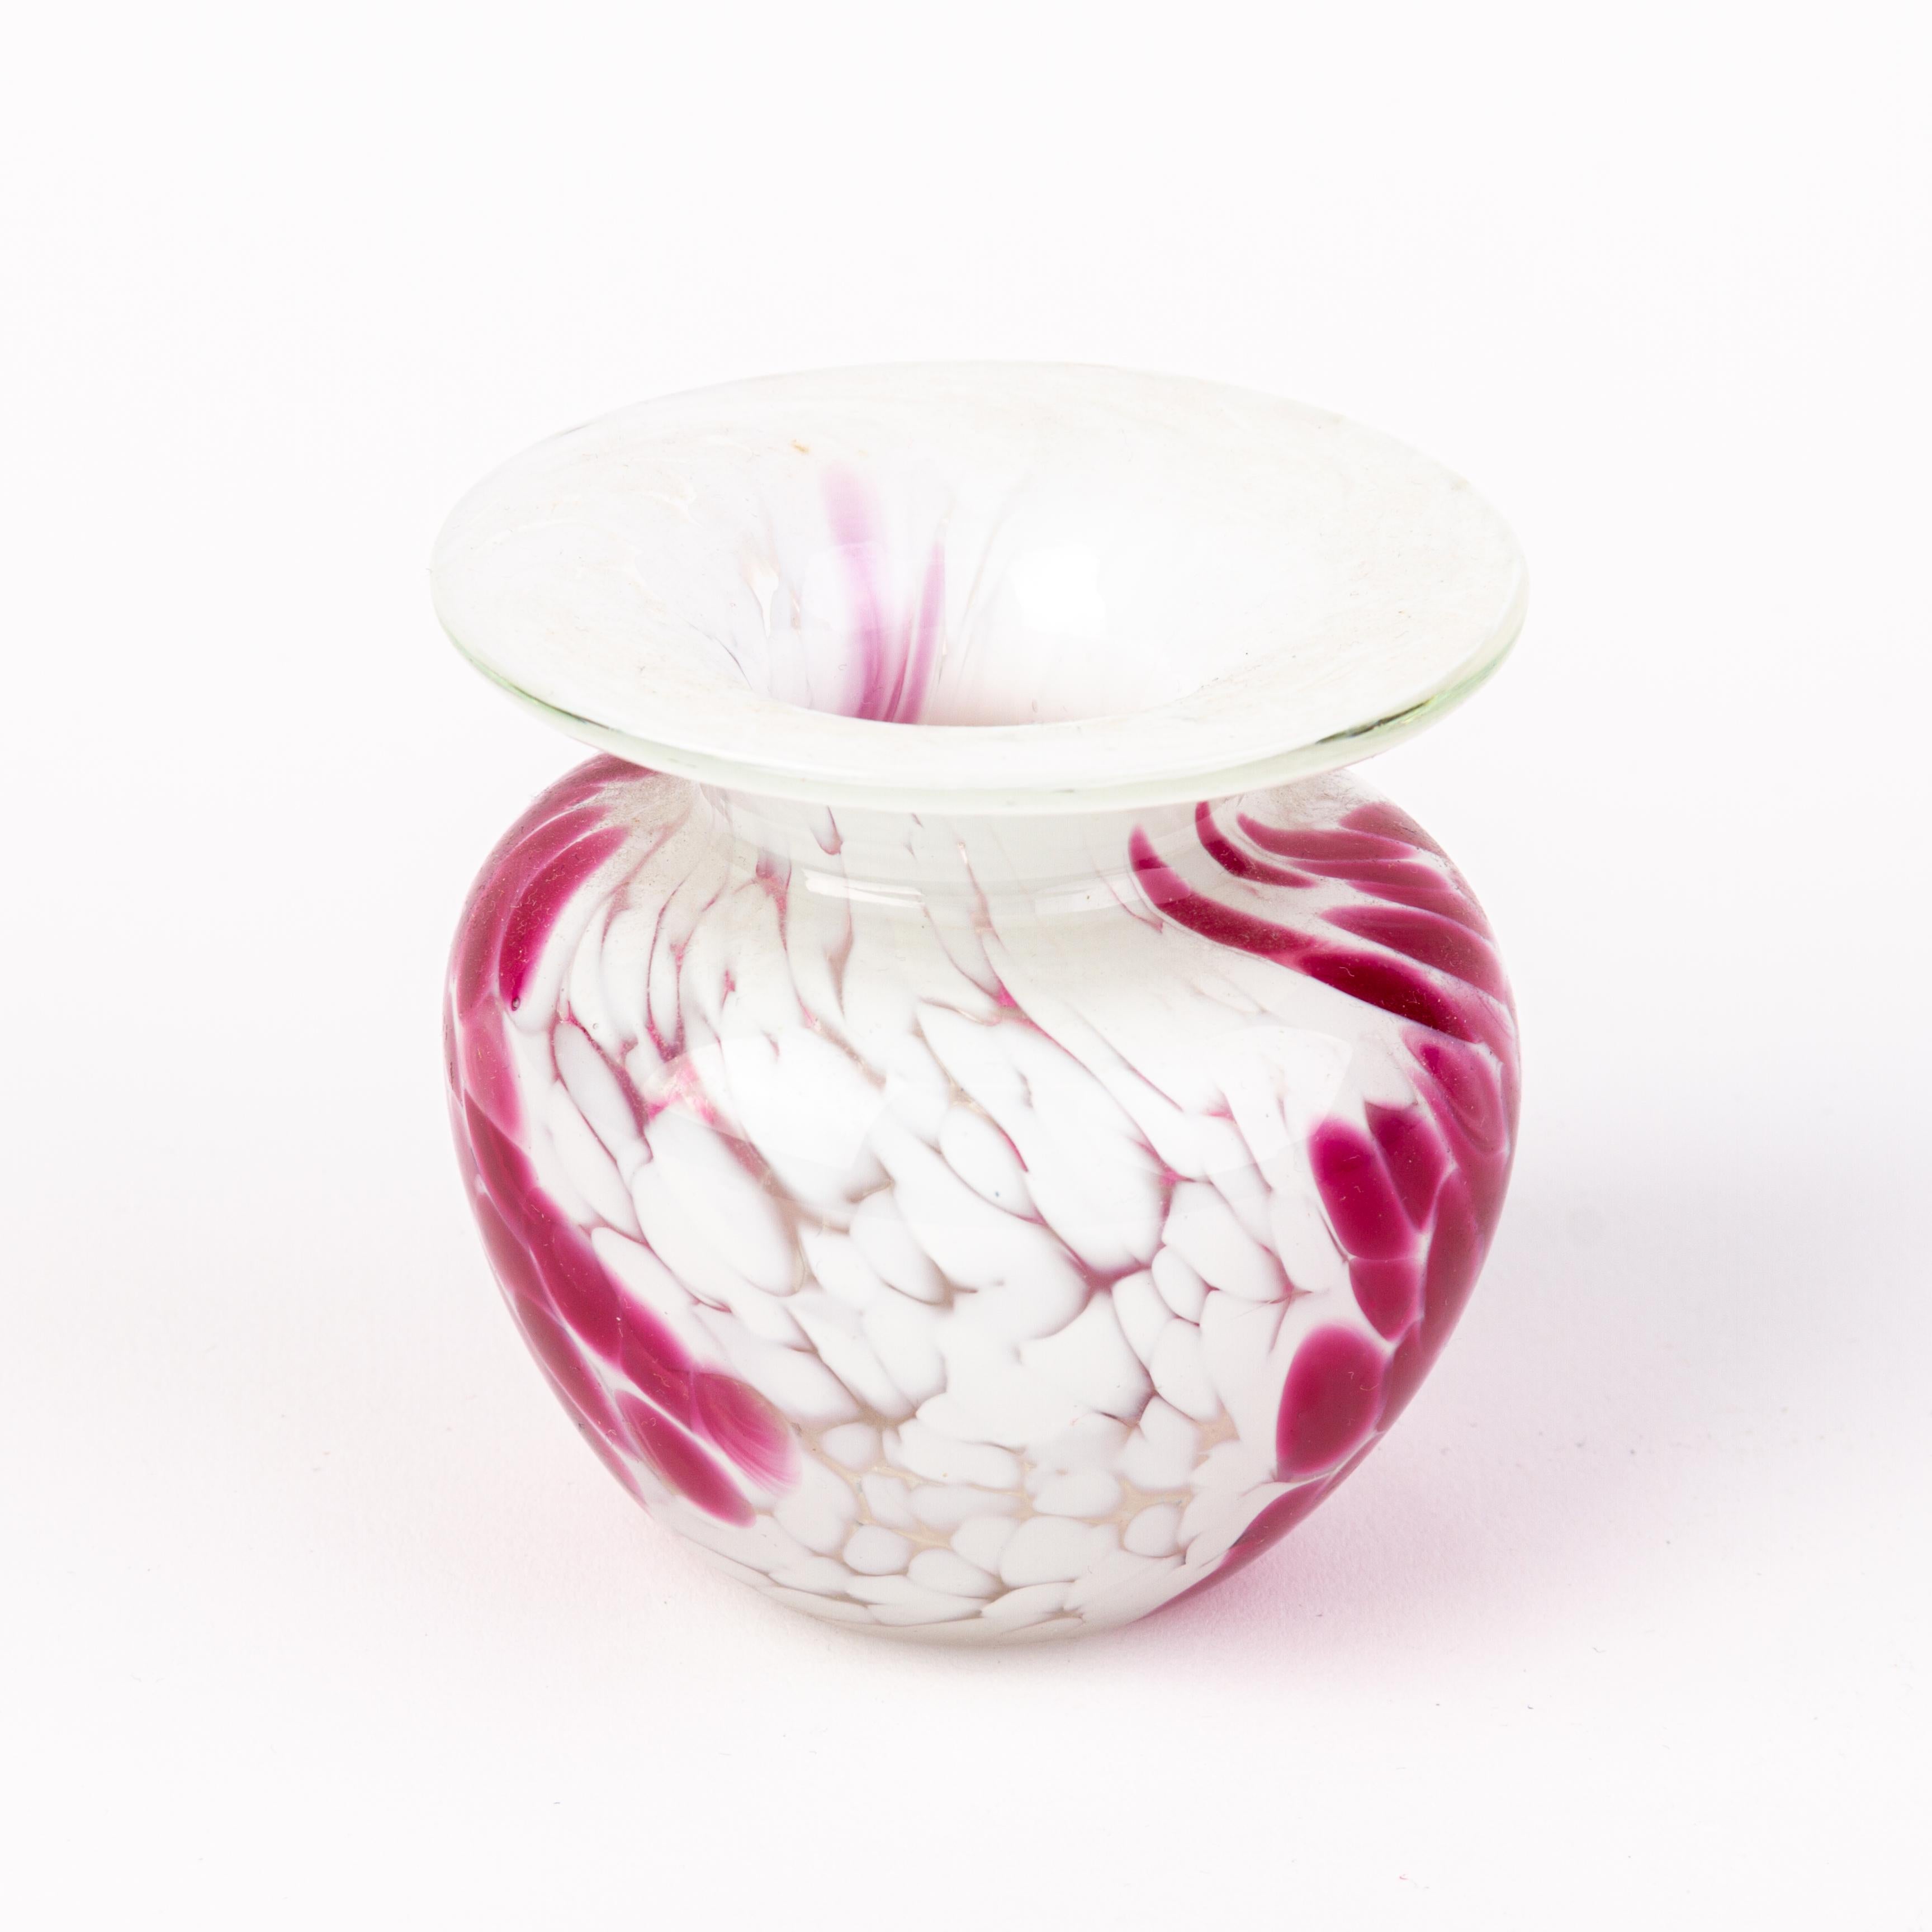 Signed Mdina Maltese Glass Designer Vase
Good condition
Free international shipping.